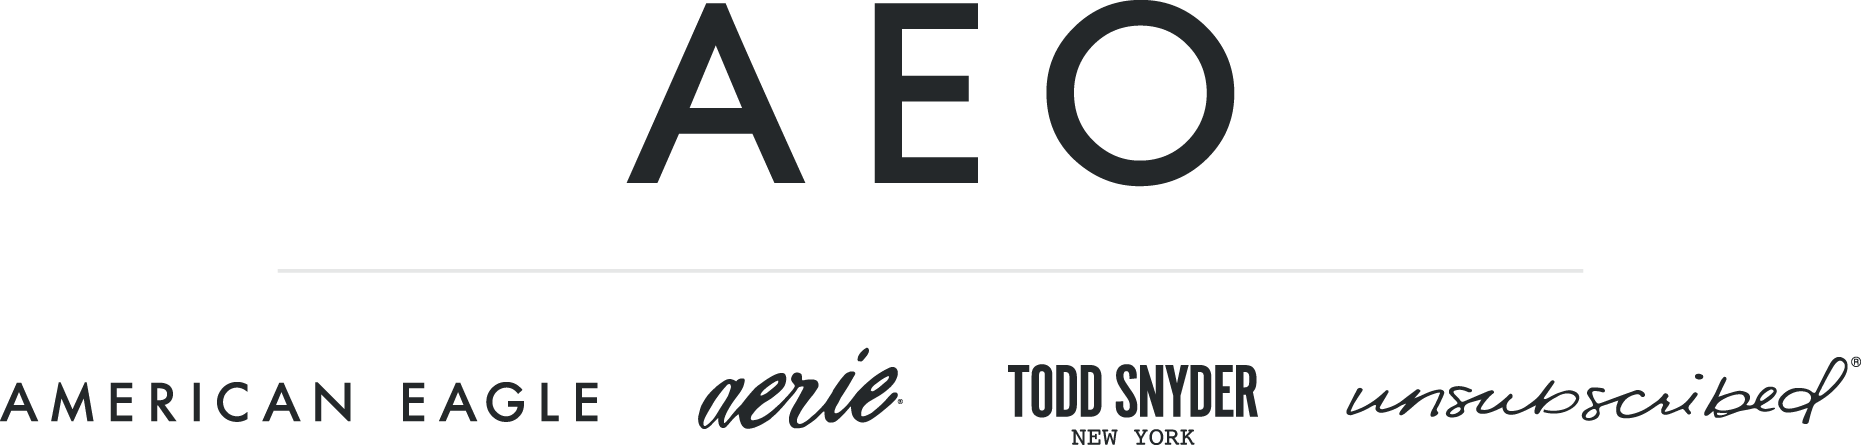 AEO Inc - American Eagle, Aeria, Todd Snyder New York, Unsubscribed